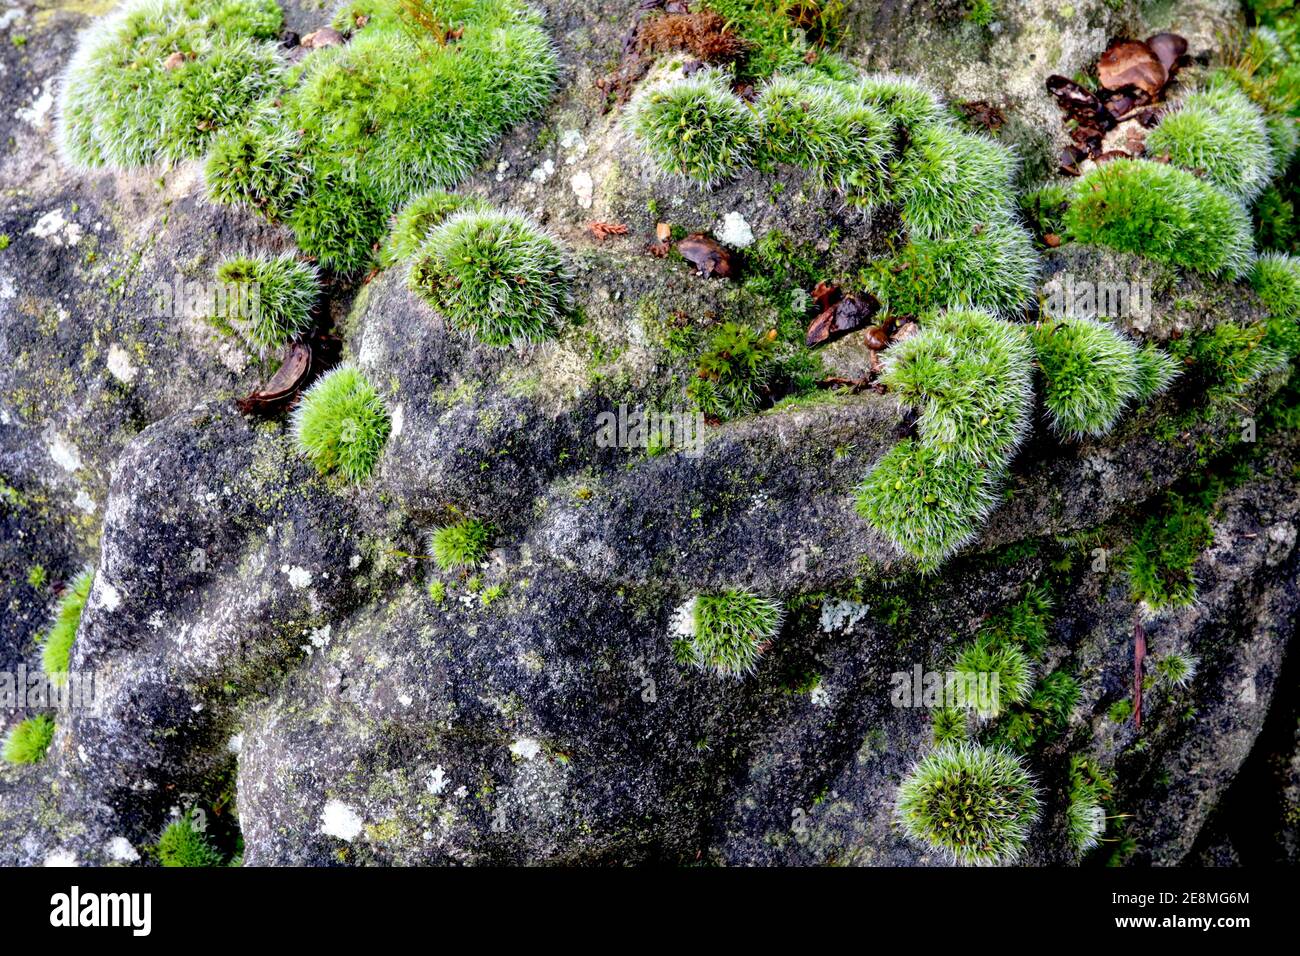 Bryophytes or moss balls growing on gravestone Stock Photo